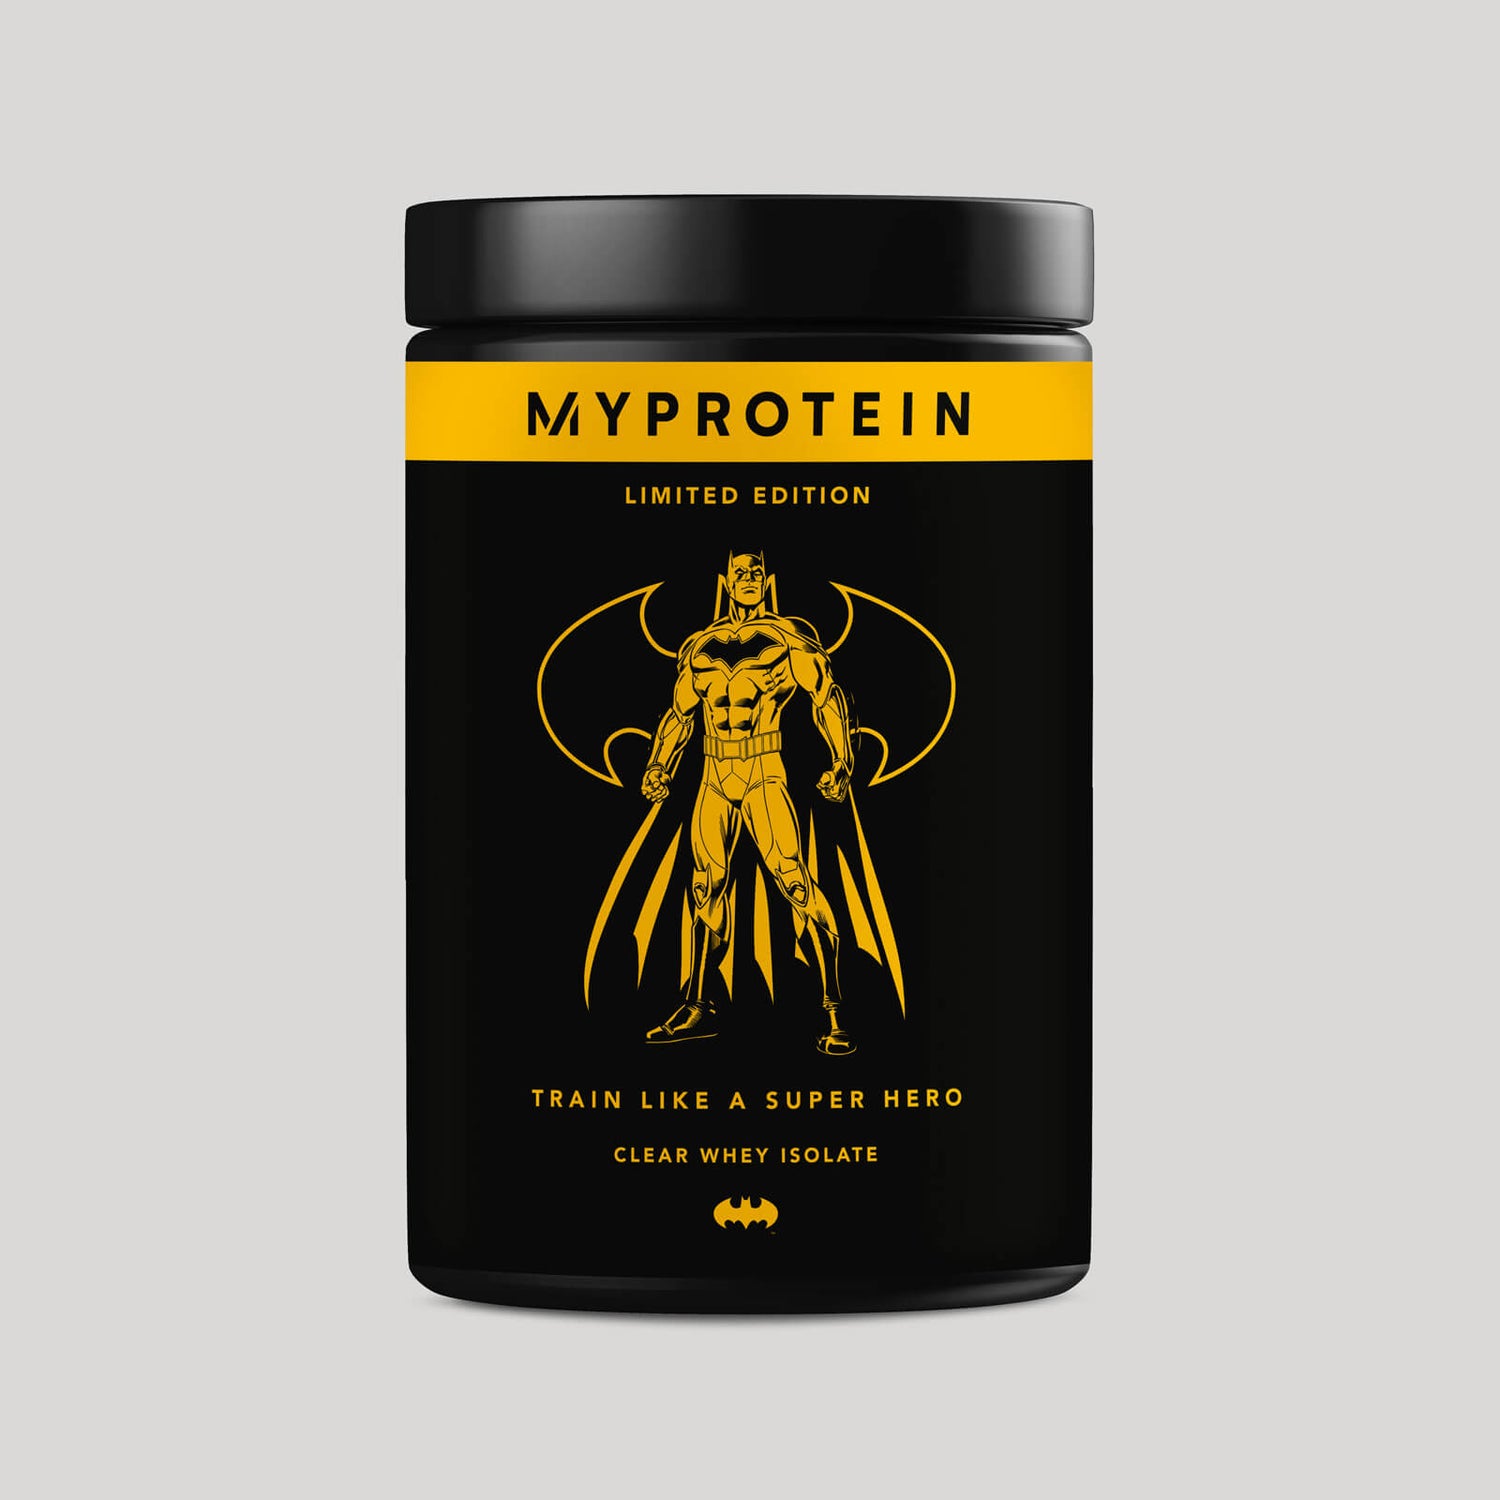 Myprotein Clear Whey x Batman (ALT)